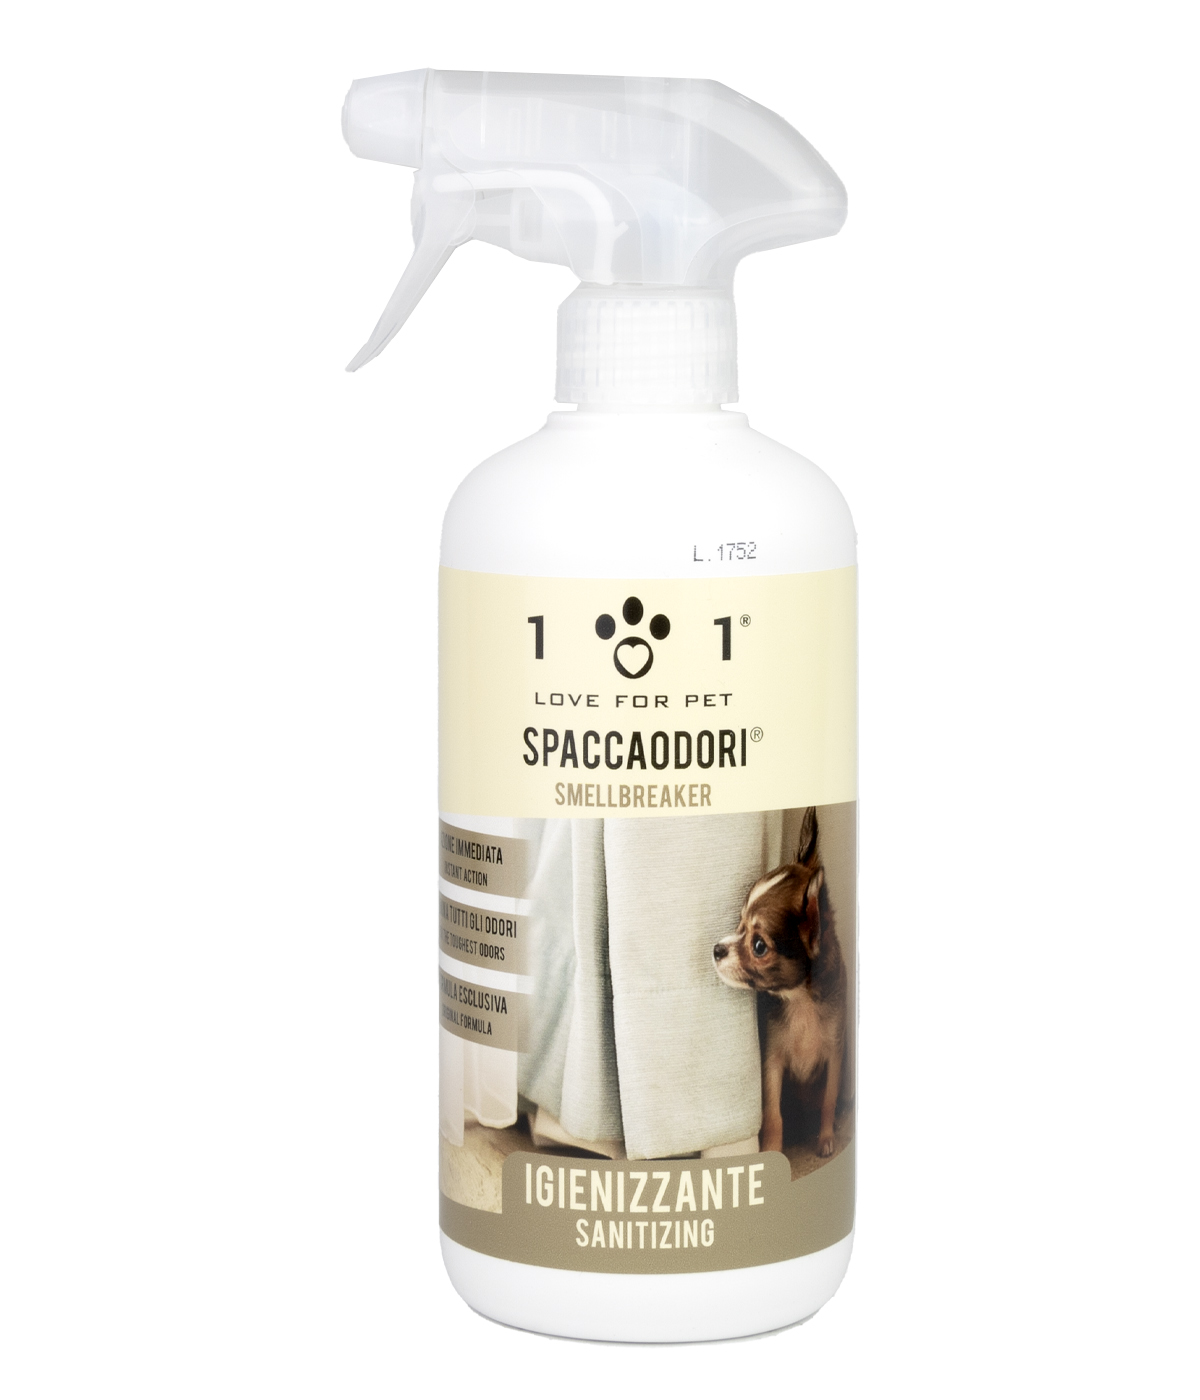 Deodorante spray per stoffe, tessuti e superfici Spaccaodori